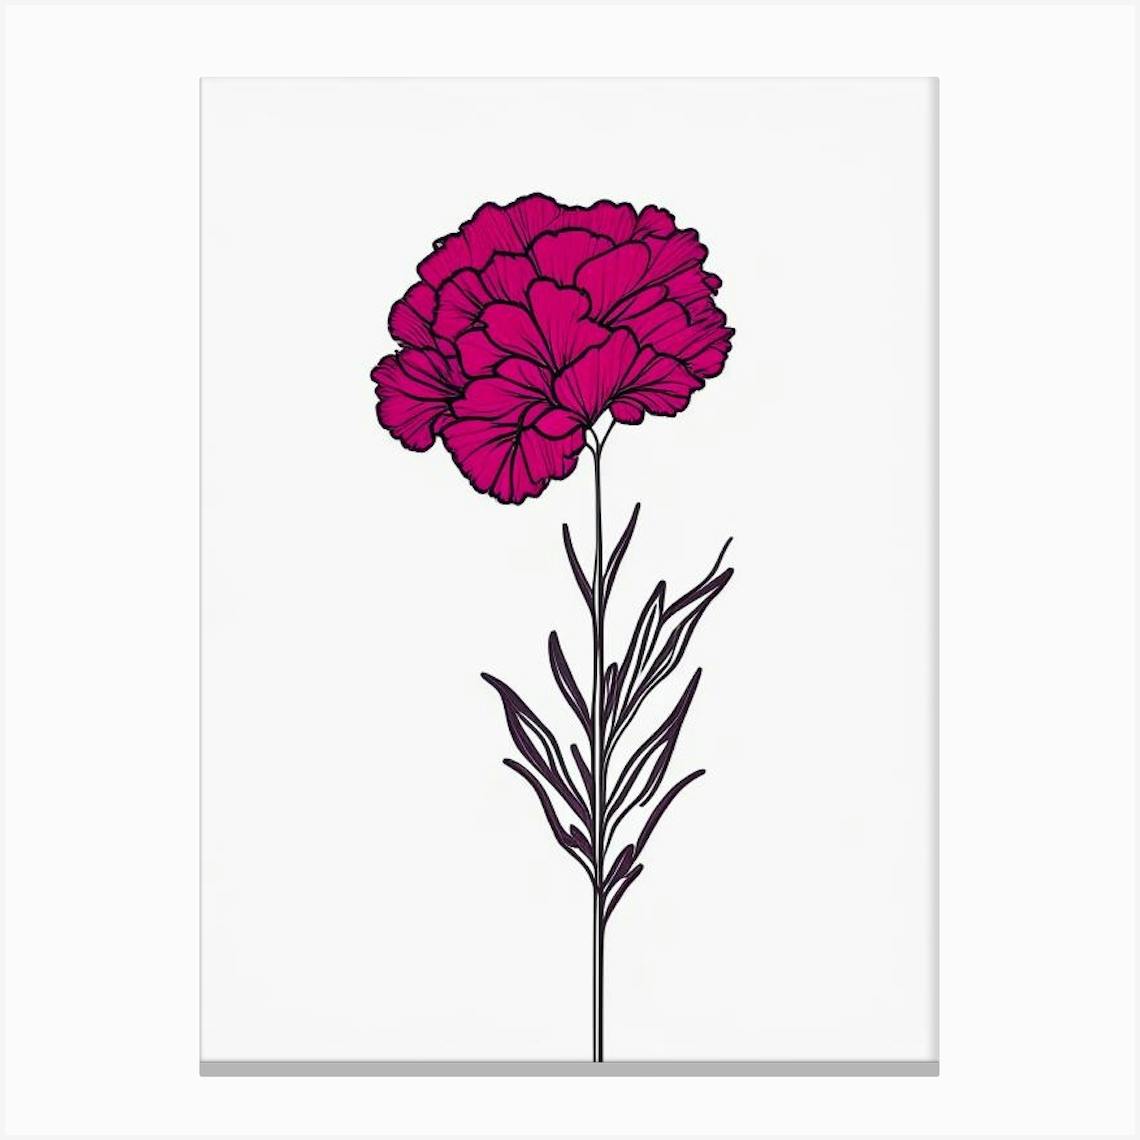 Carnation Flower Drawing Images - Free Download on Freepik